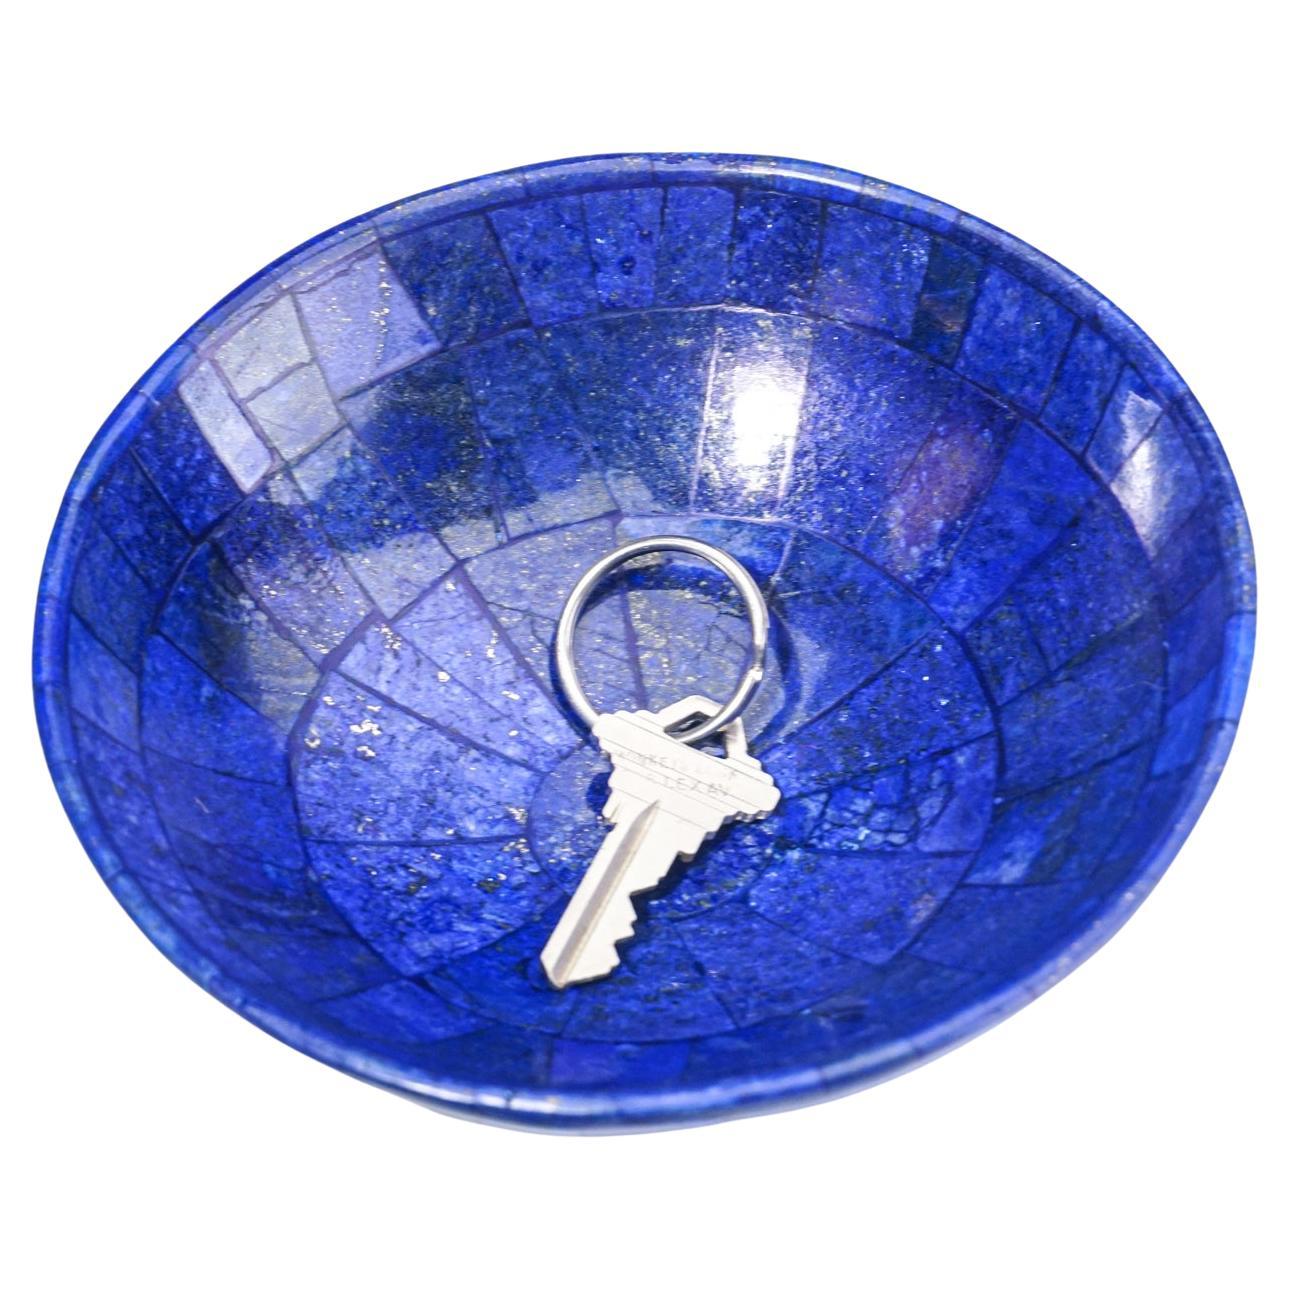 Genuine Polished Lapis Lazuli Bowl (1.7 lbs) For Sale